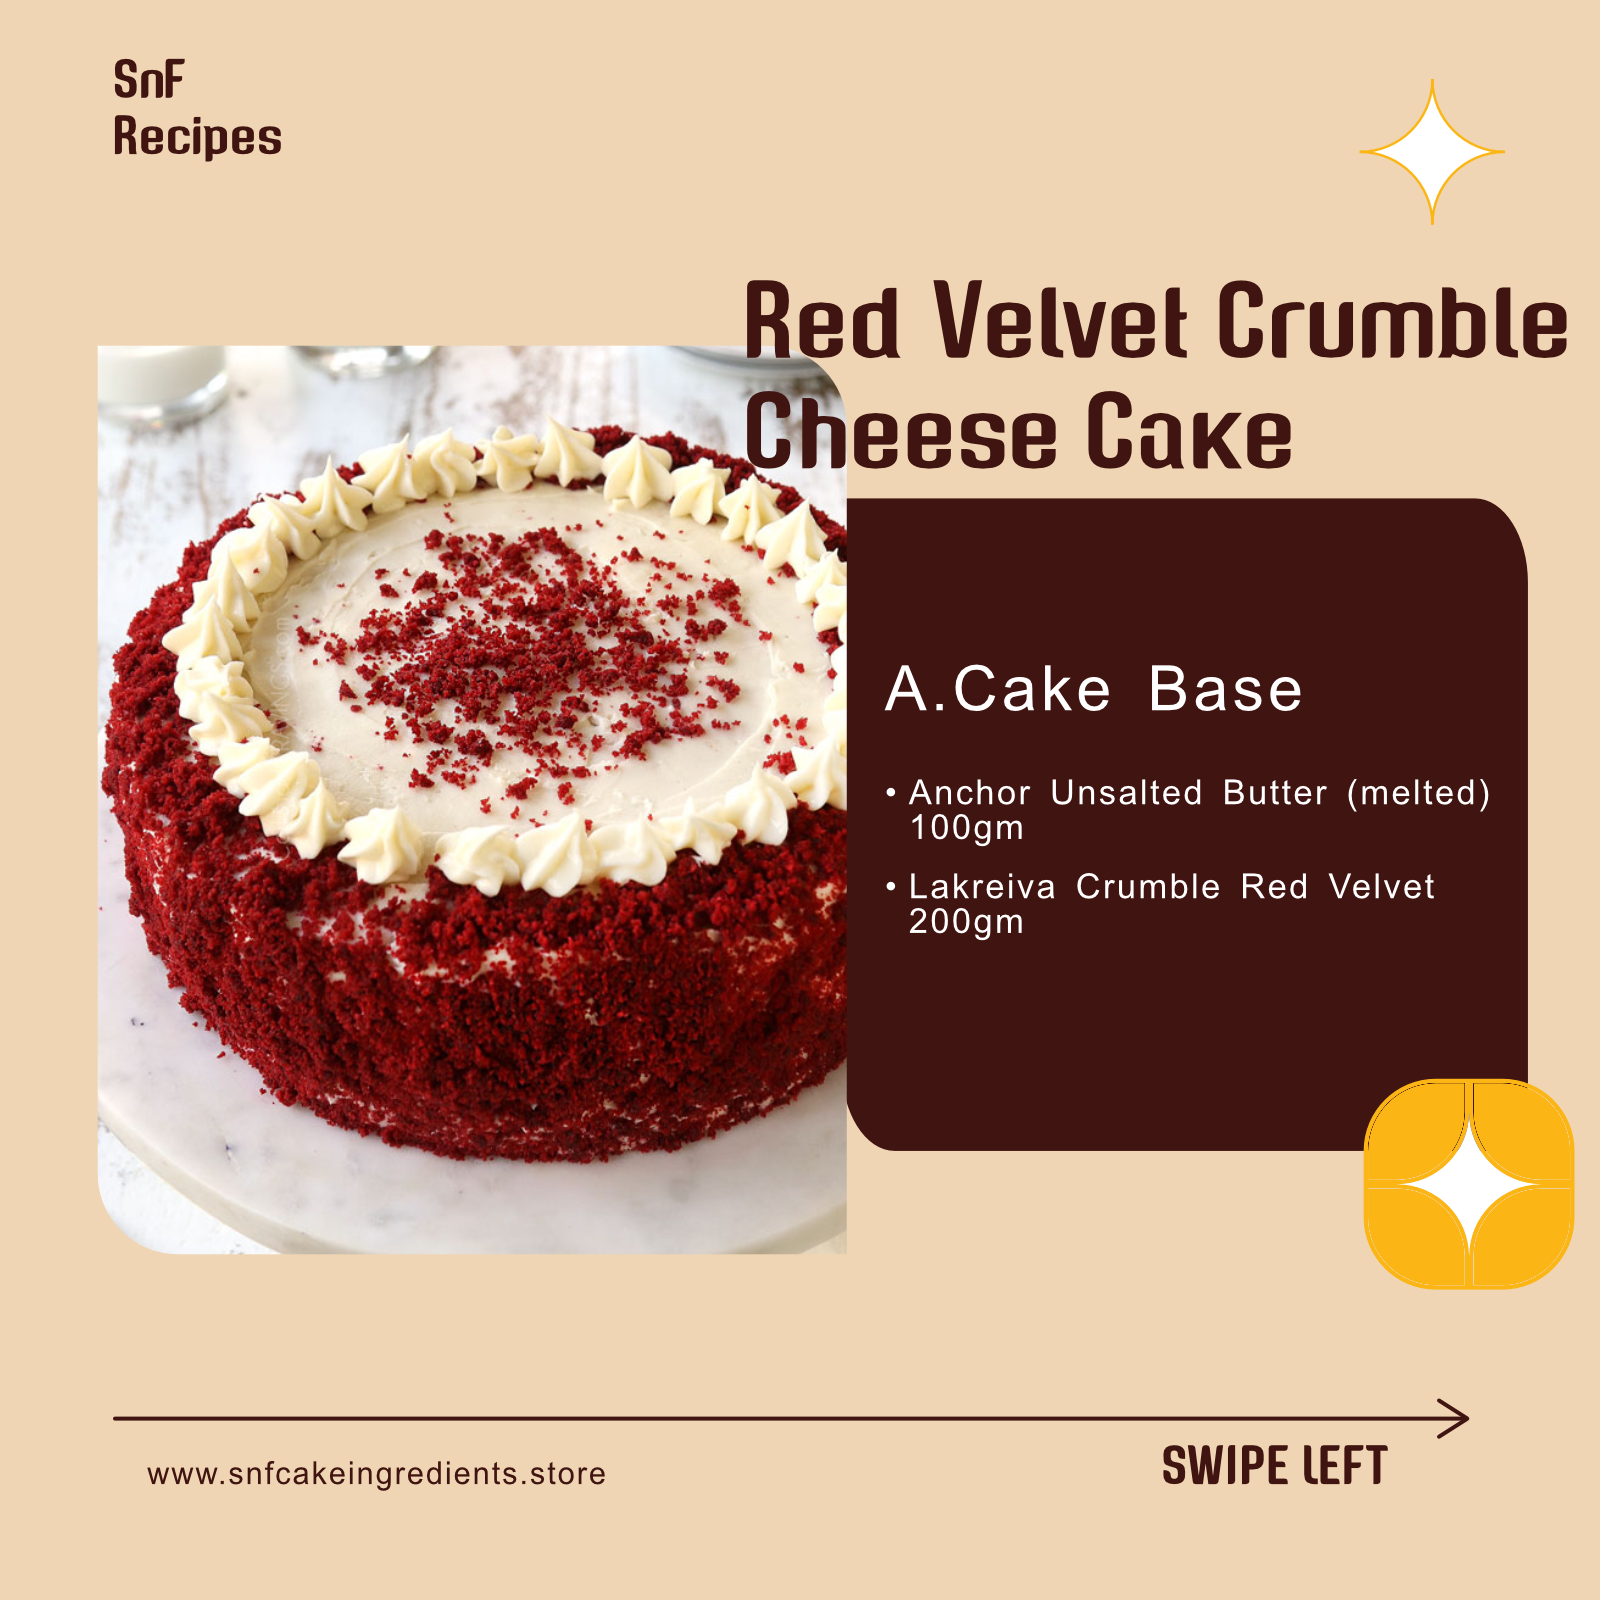 Red Velvet Crumble Cheese Cake